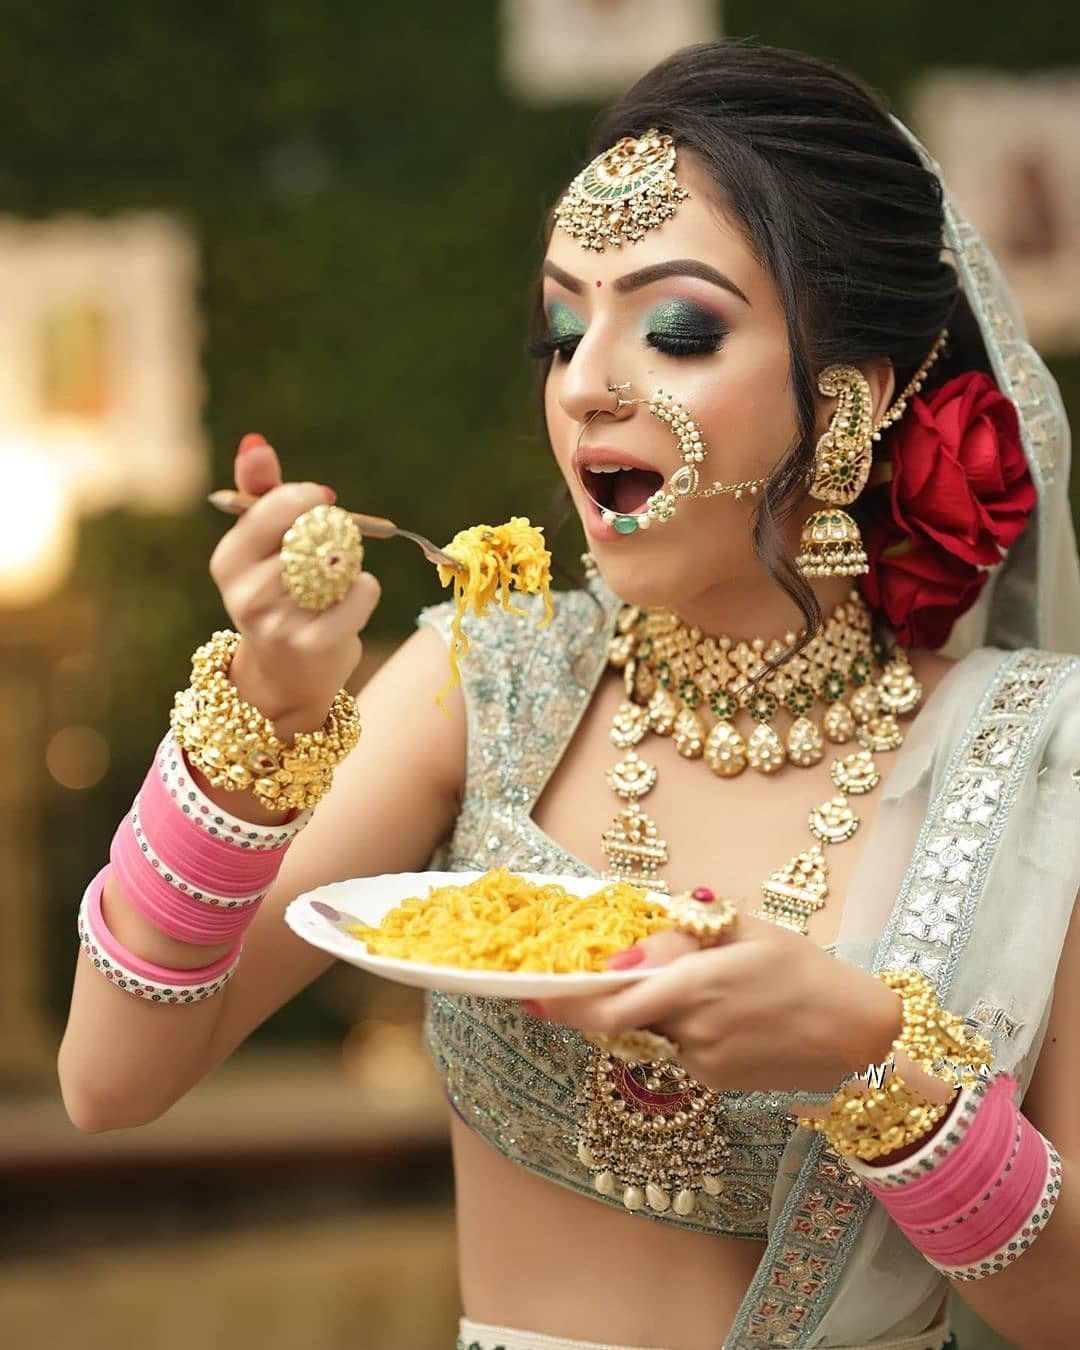 Pin by Roshan kumar on Bengali wedding culture | Bengali bridal makeup, Bridal  photoshoot, Bengali wedding